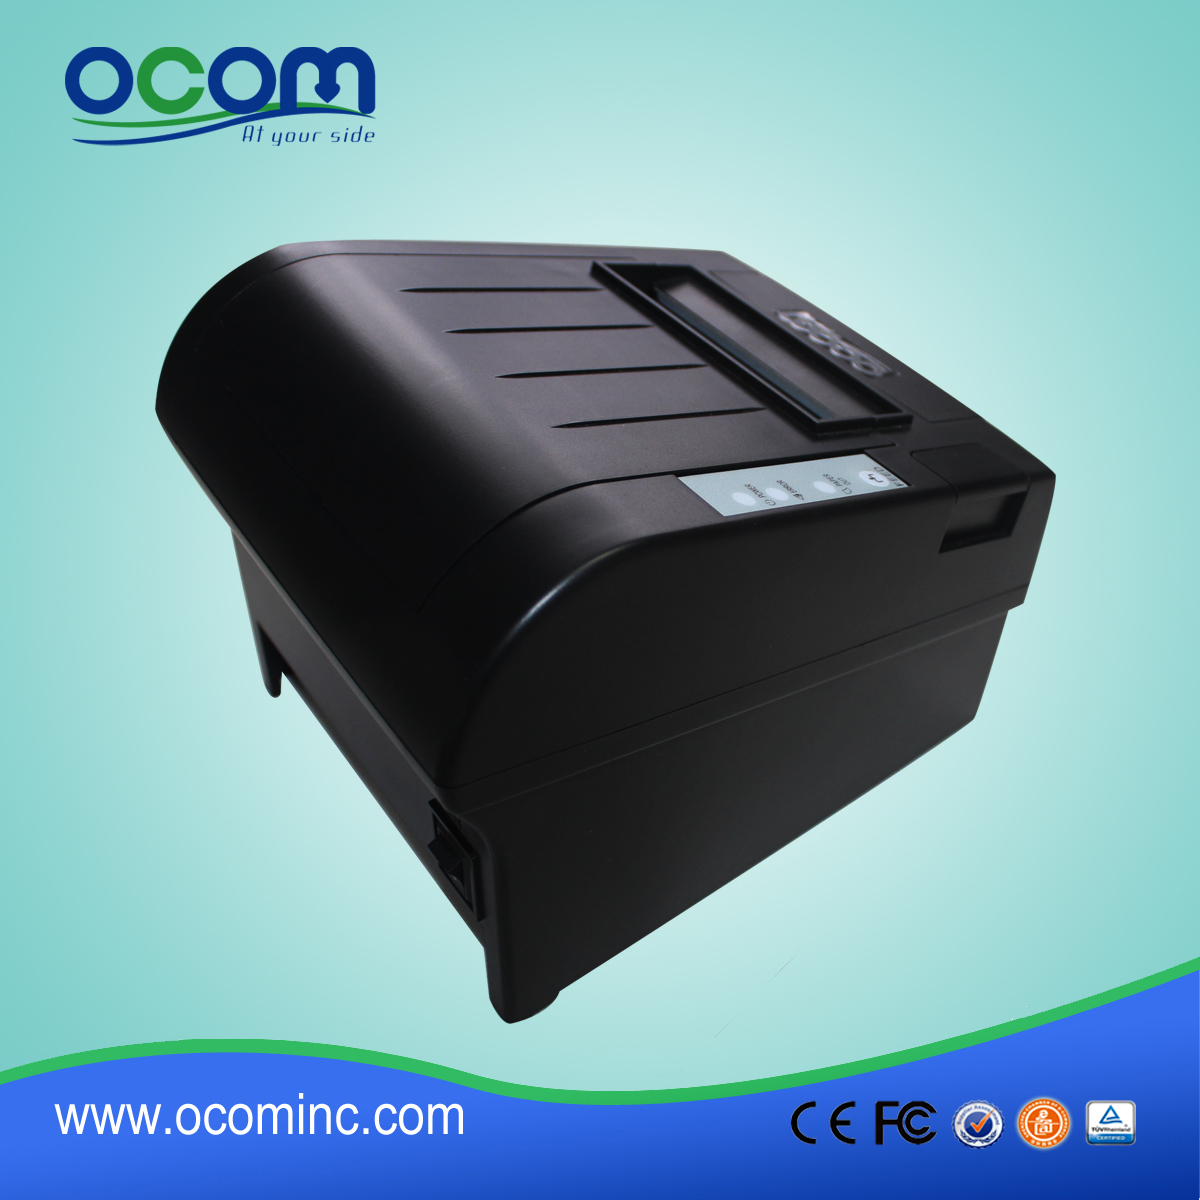 80mm热敏纸 POS打印机 OCPP-806